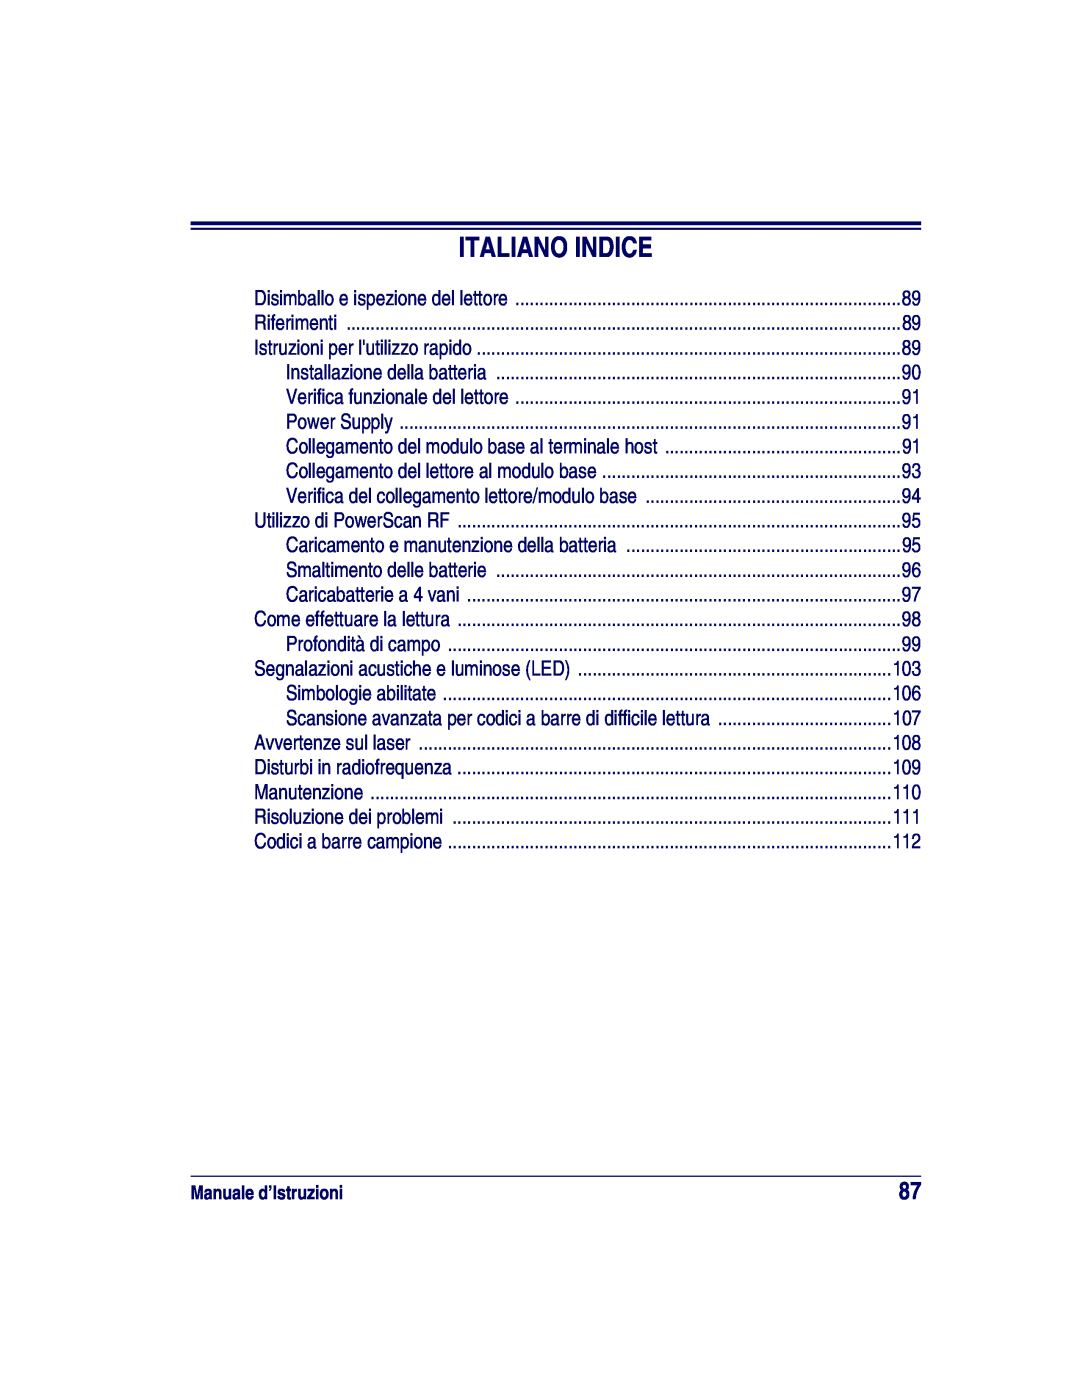 Datalogic Scanning HD, SR, XLR manual Italiano Indice, Manuale d’Istruzioni 